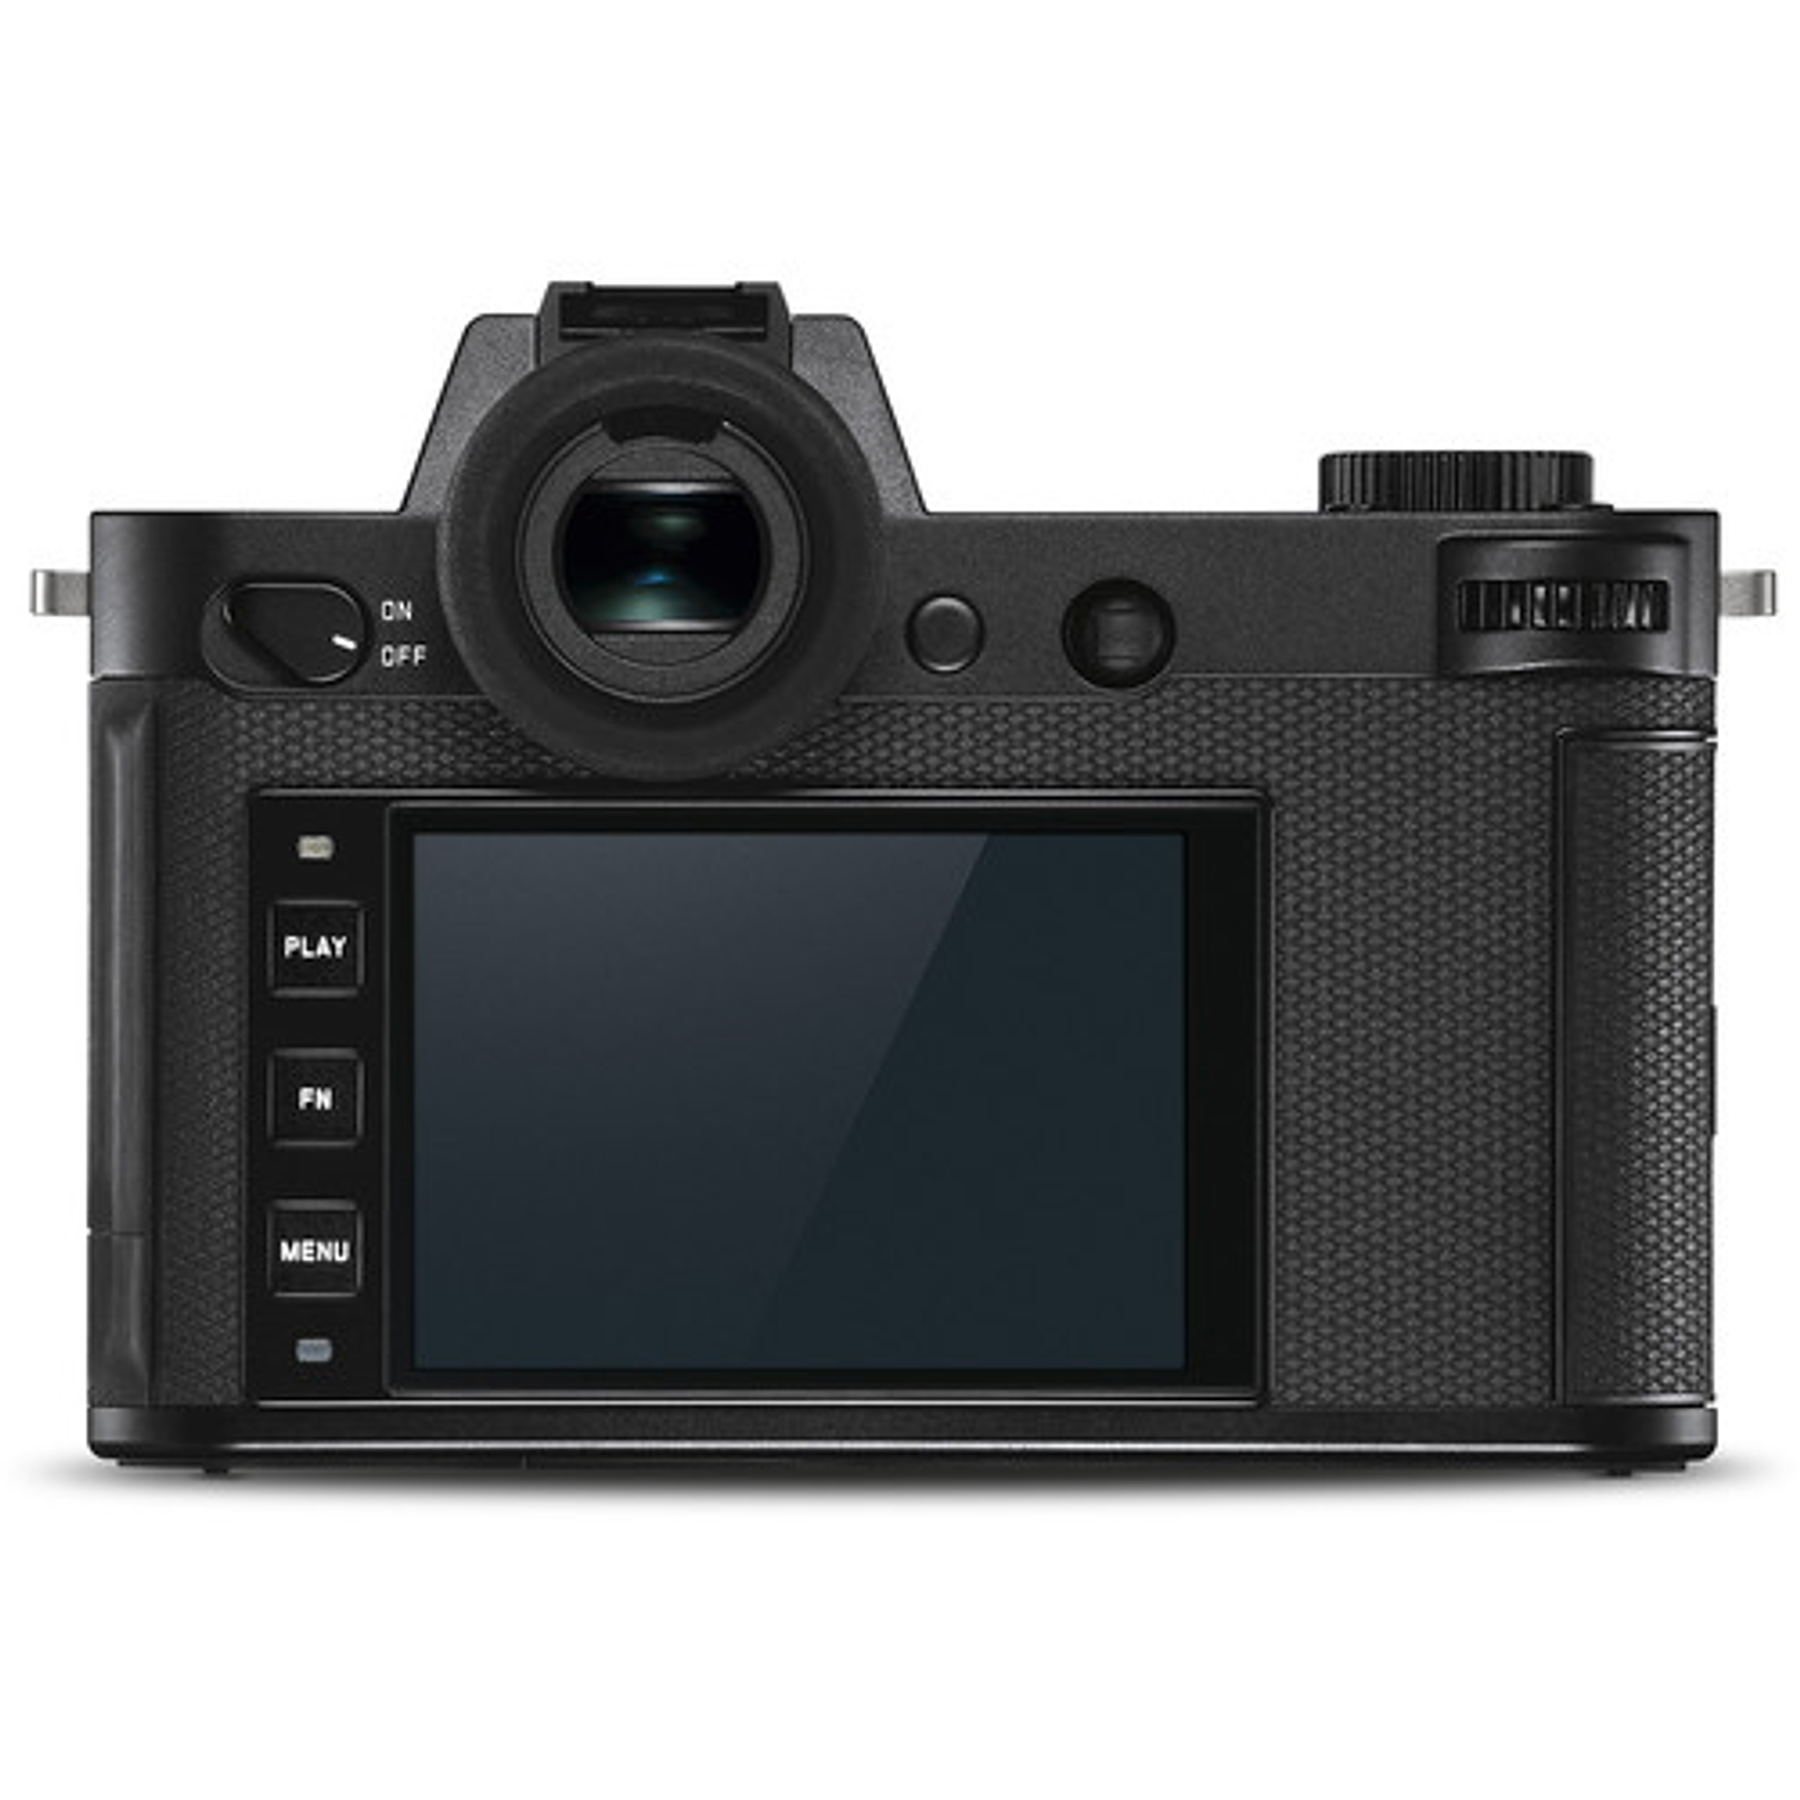 Cámara digital Mirrorless Leica SL2 con 24-70mm f/2.8